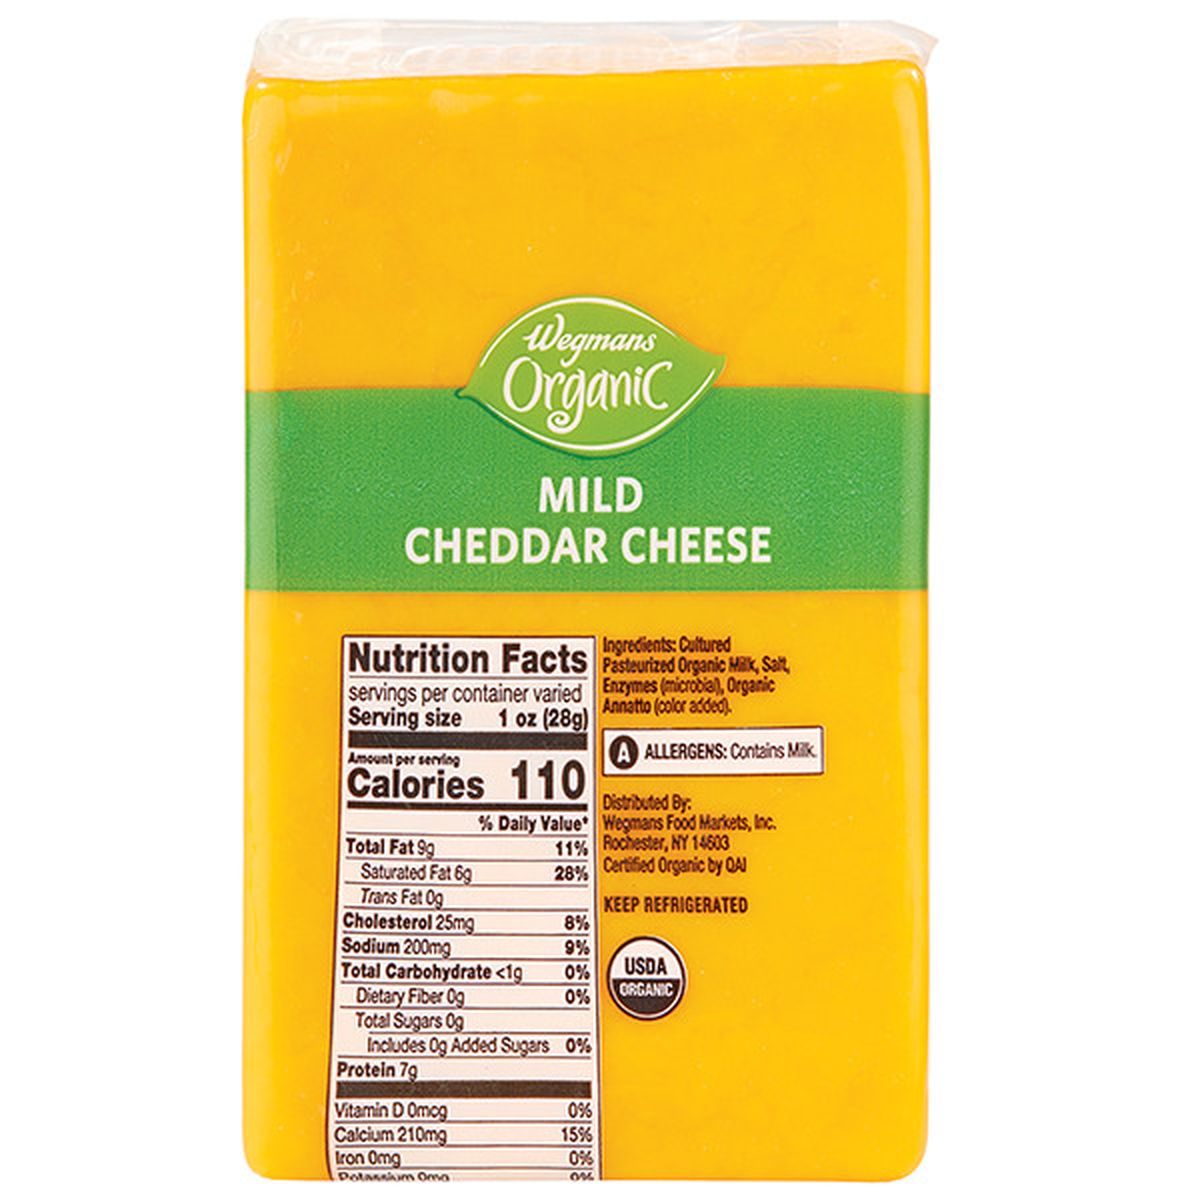 Calories in Wegmans Organic Mild Cheddar Cheese